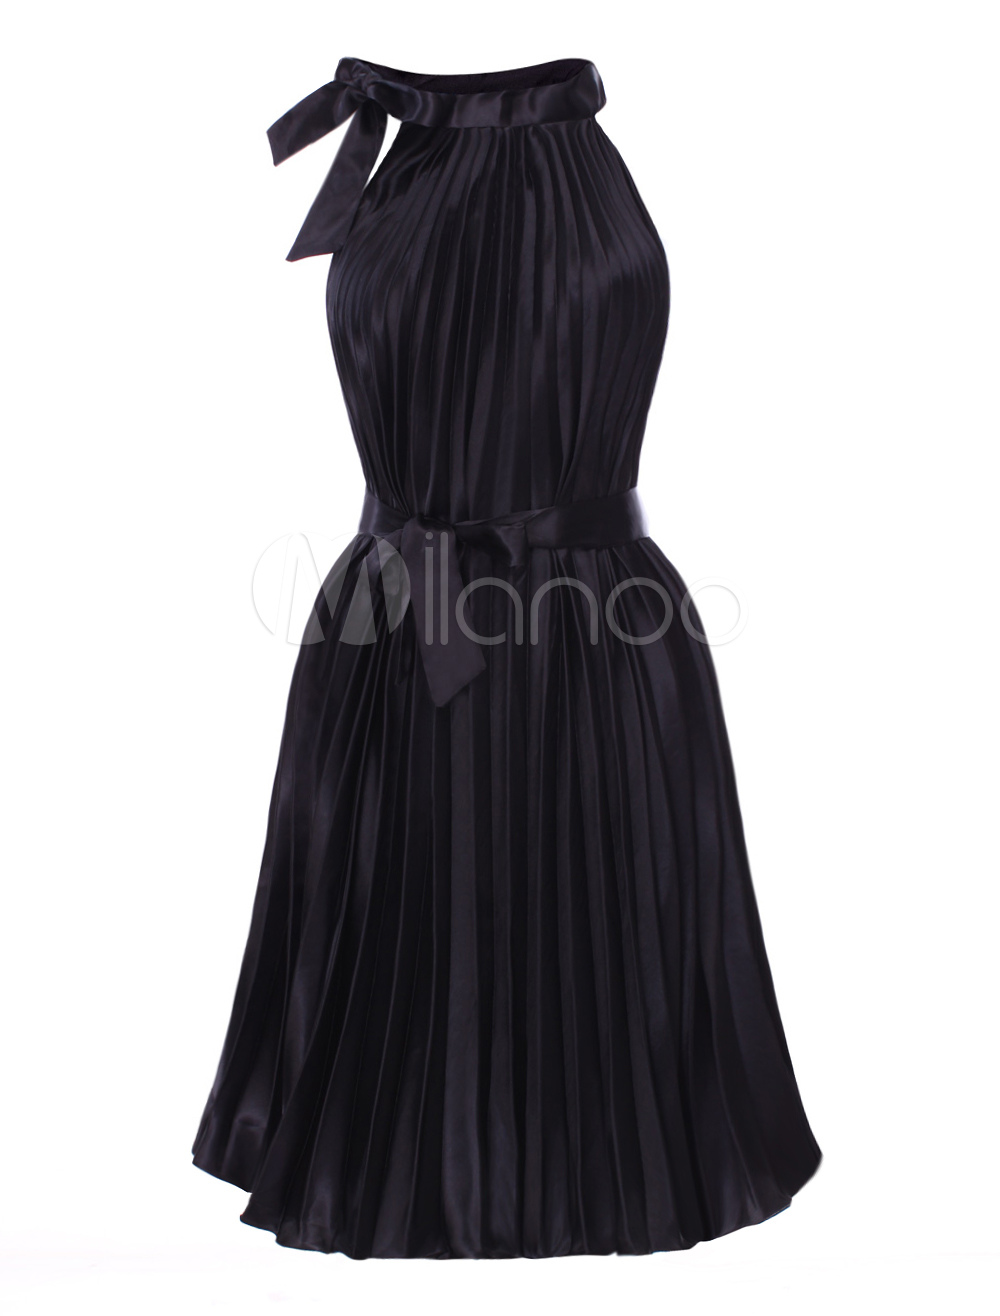 Stylish Black Silk Ribbon Sleeveless Ladies Dress (Women\\'s Clothing Skater Dresses) photo